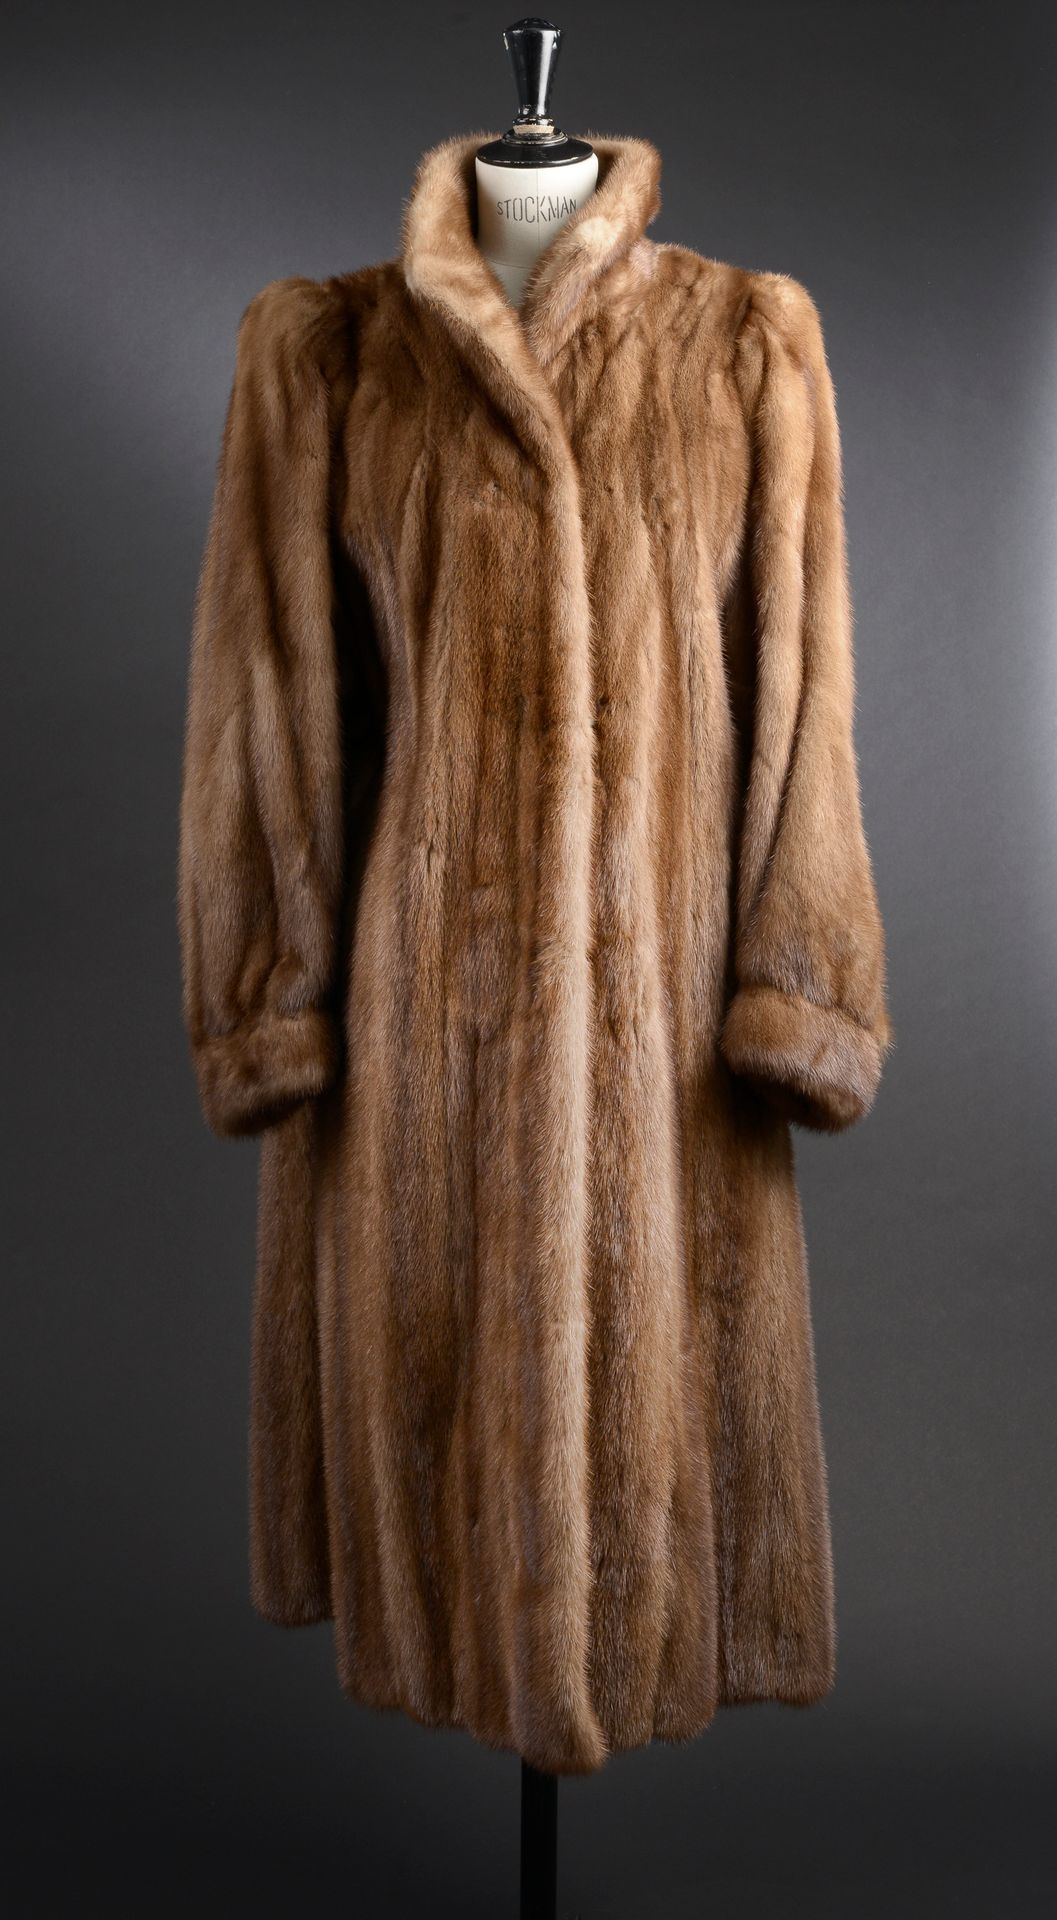 Null E.P. COAT - Tamaño estimado: 42
Abrigo largo de visón claro, cuello alto, m&hellip;